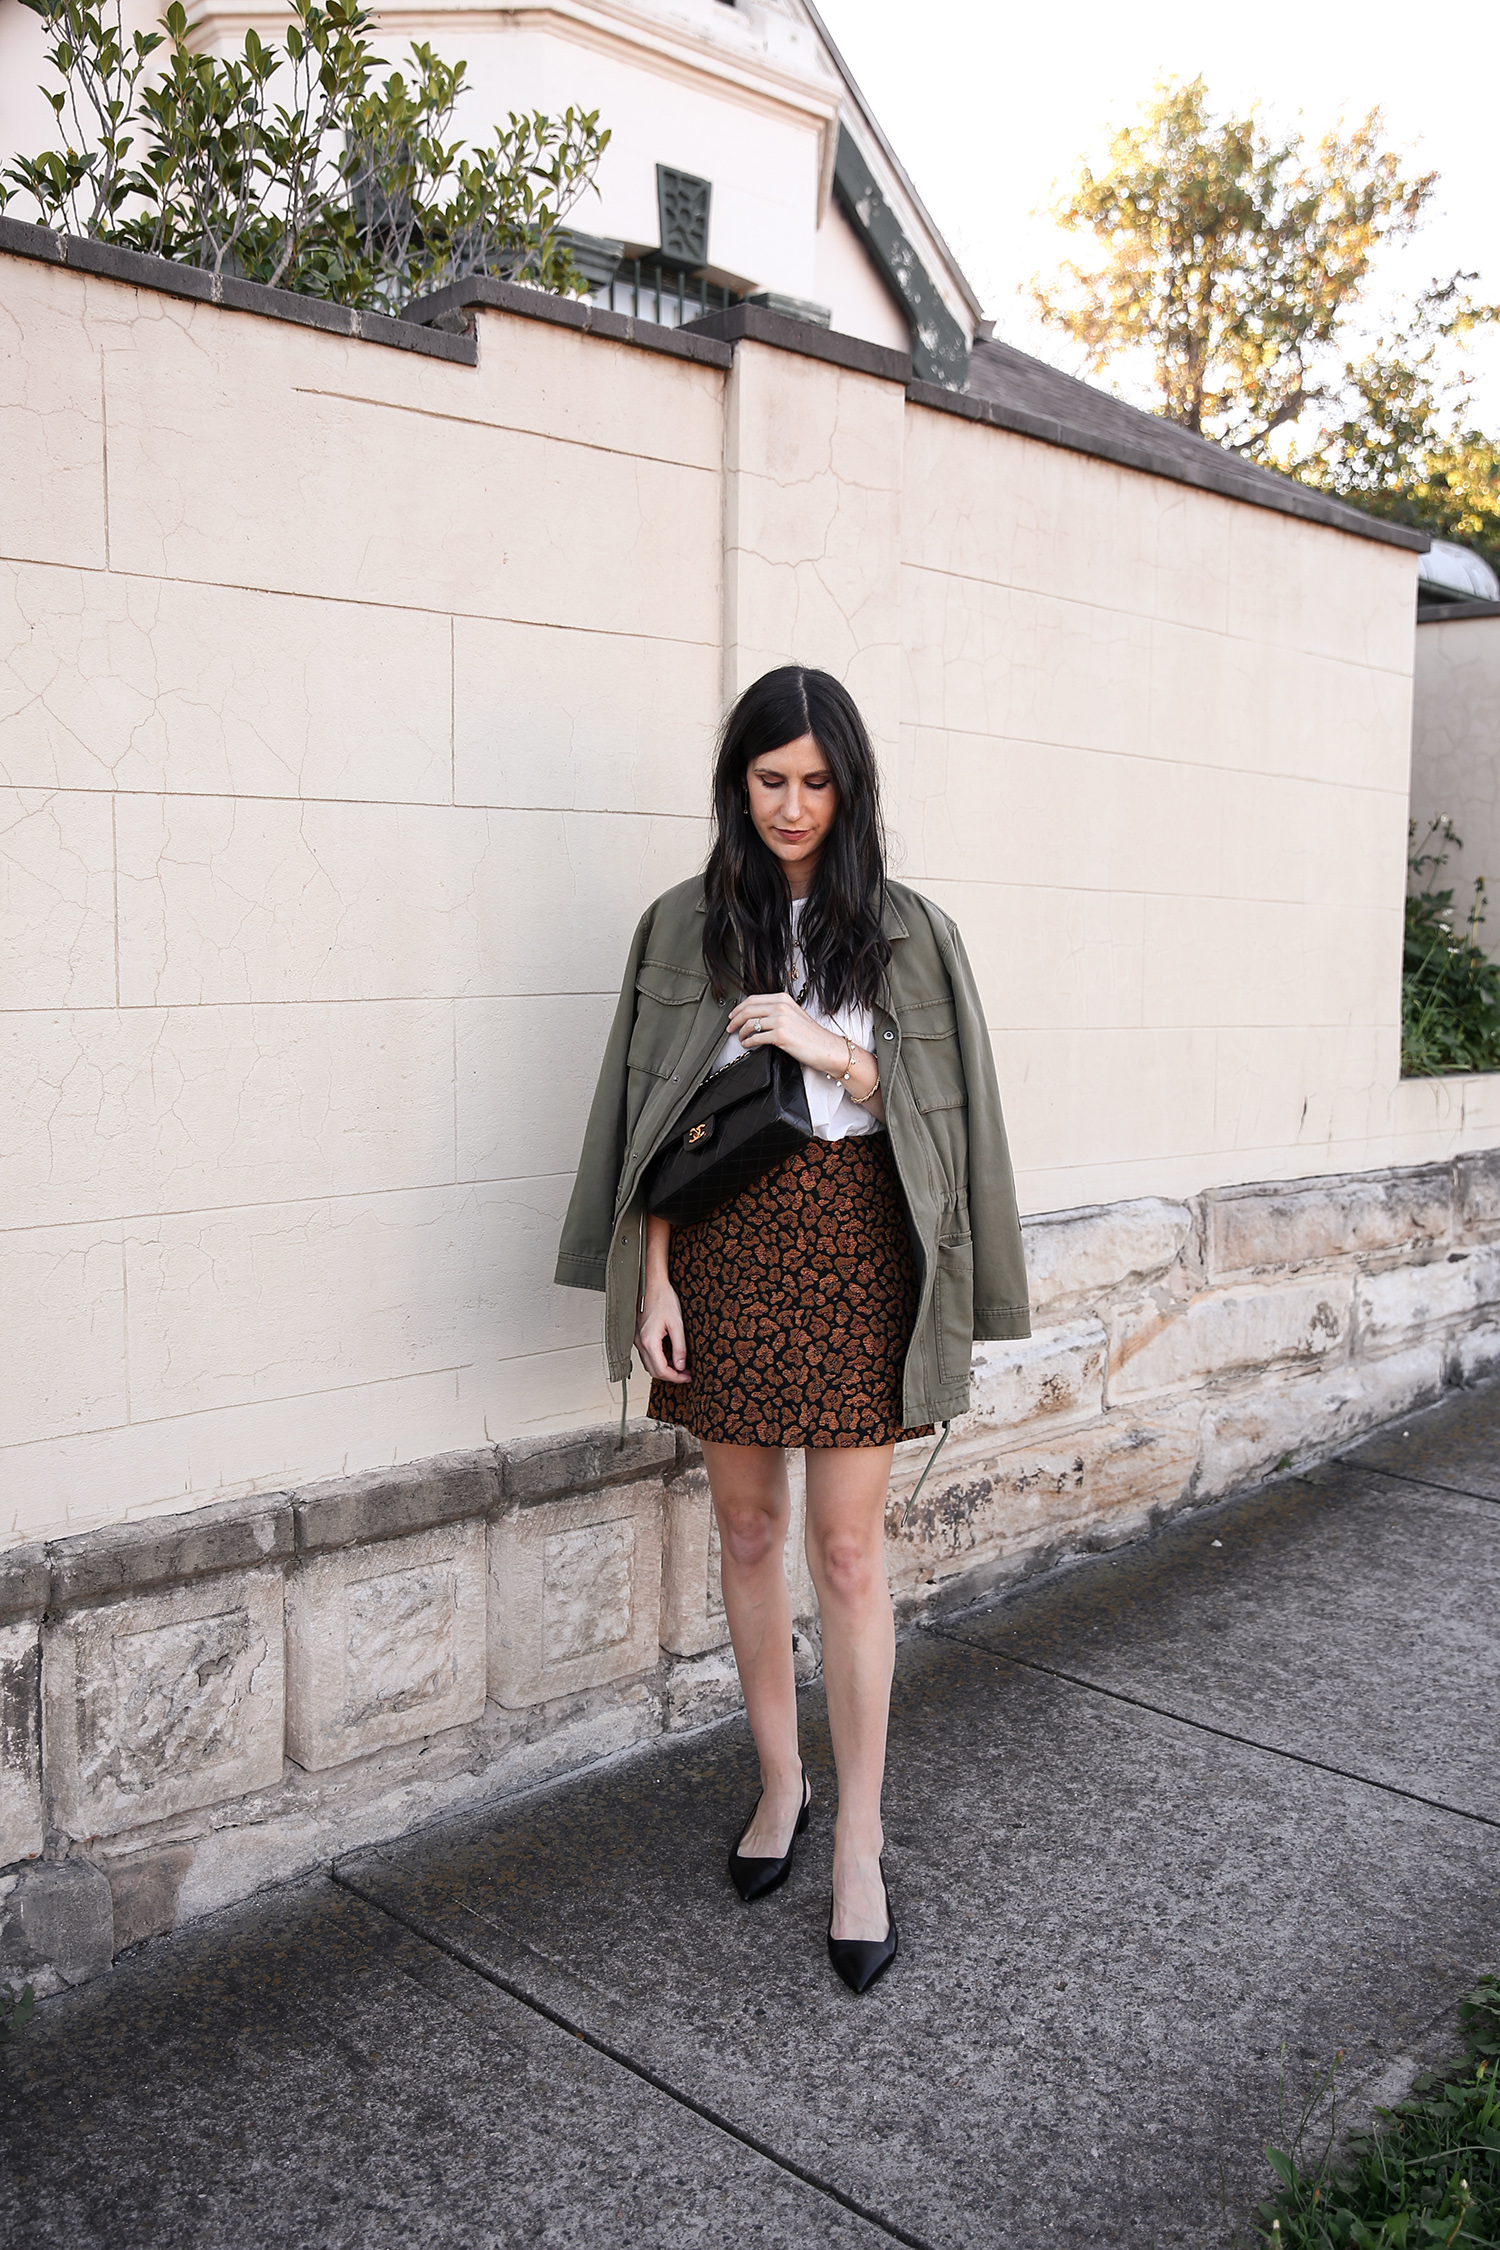 Autumn Outfit wearing a leopard print skirt